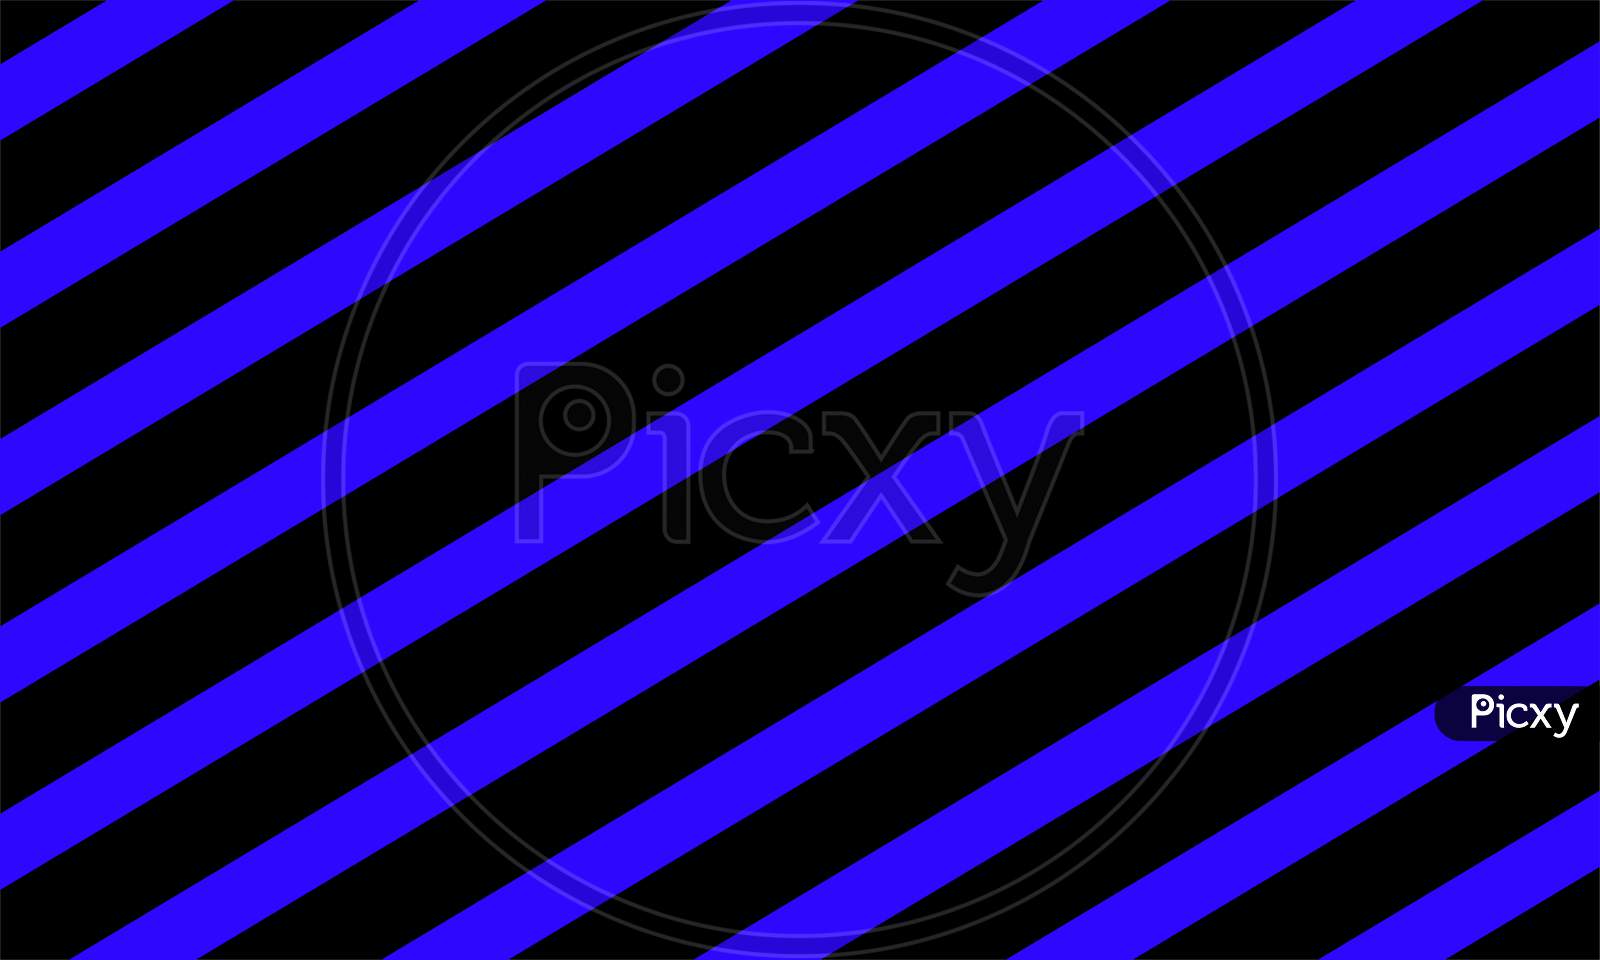 simple stripes: diagonal